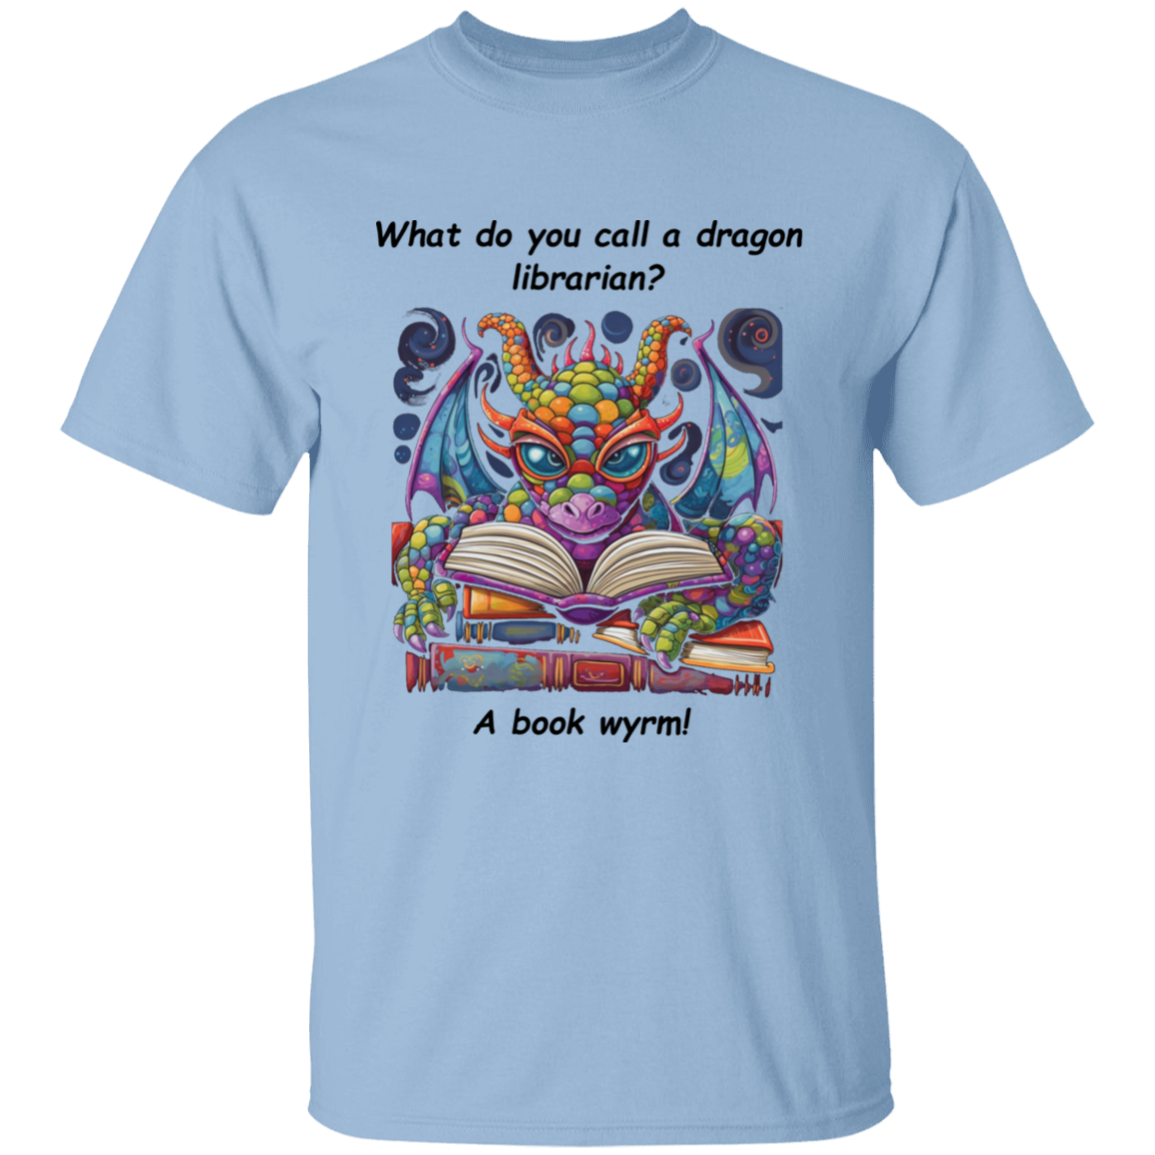 A Novel Dragon T-Shirt!